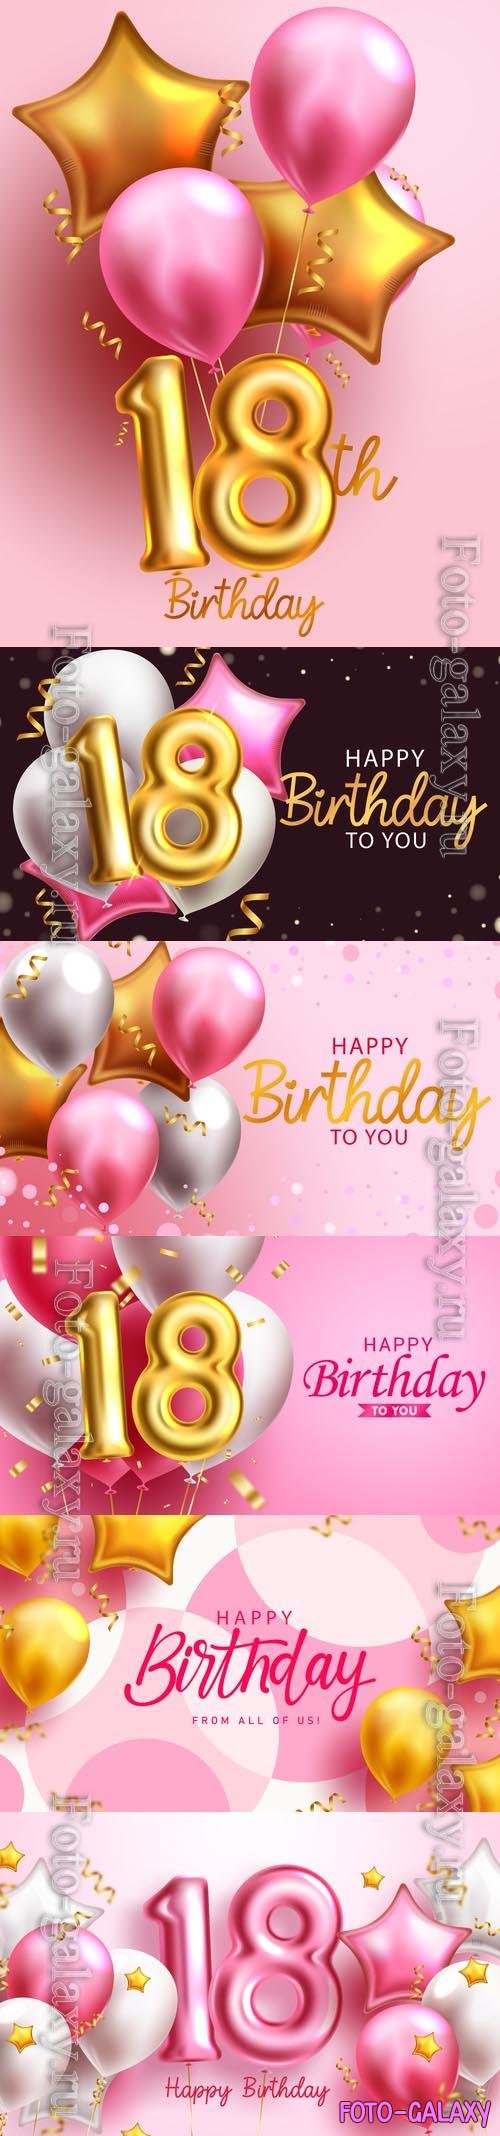 18th birthday balloon vector design, happy birthday text design